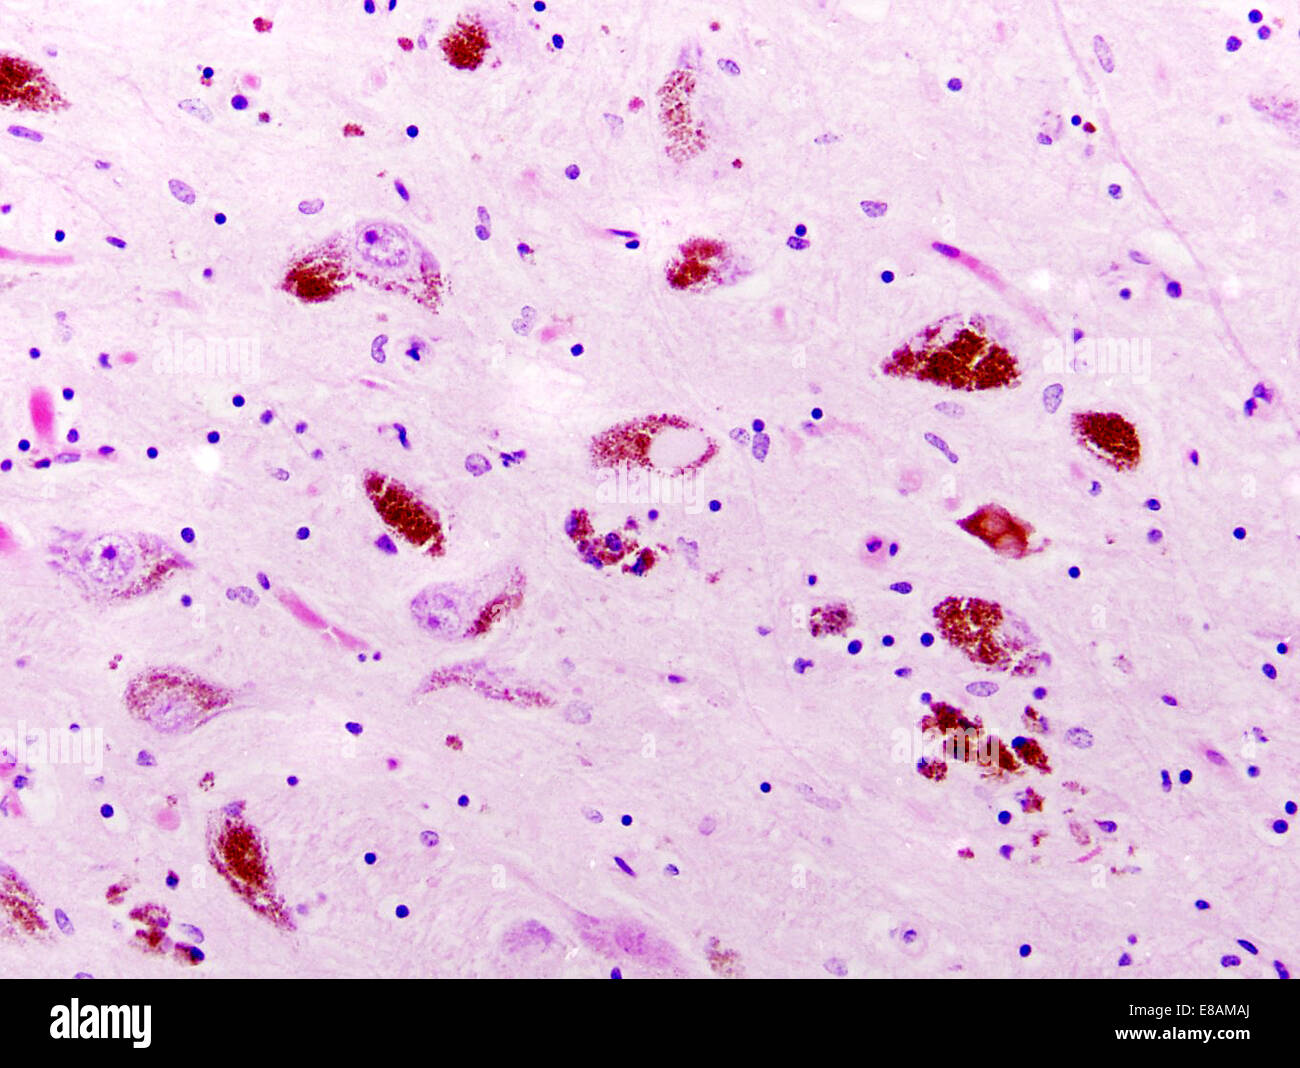 Parkinson's disease, substantia nigra, Lewy bodies Stock Photo